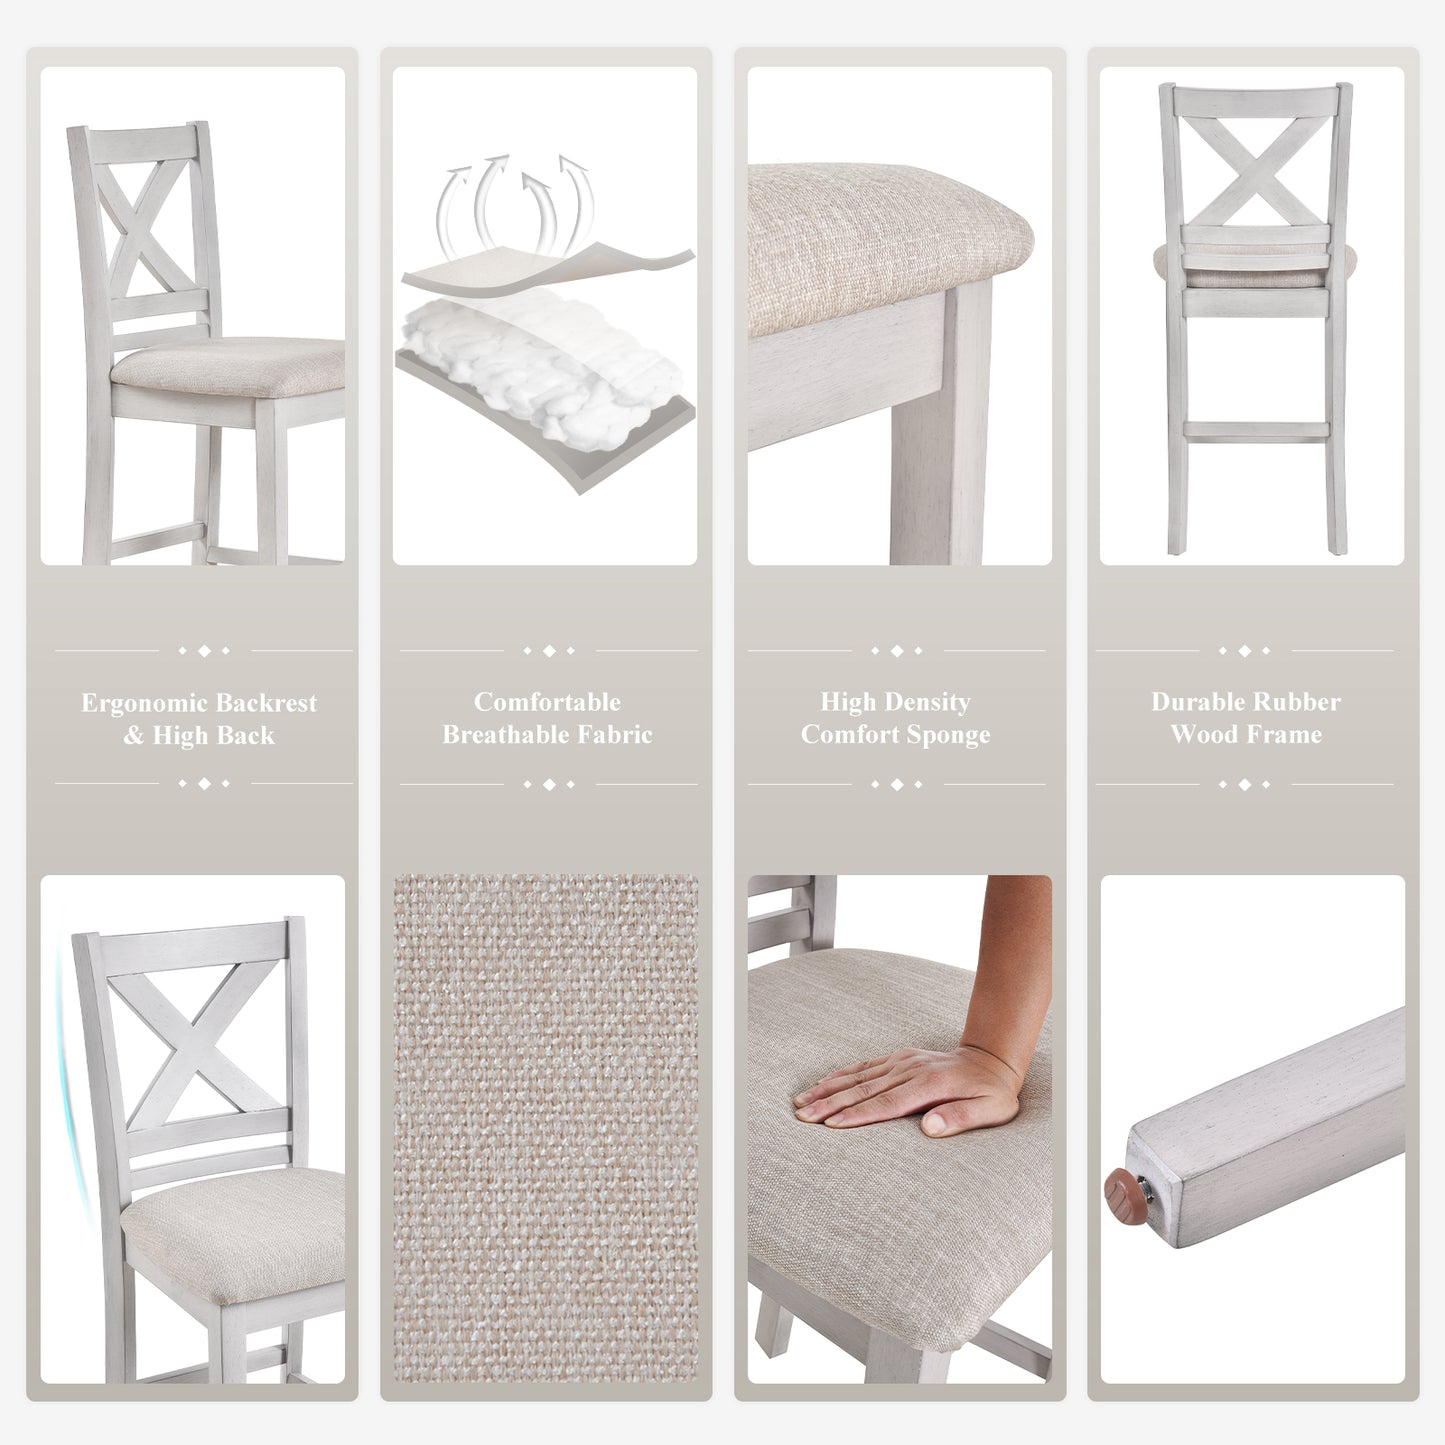 COLAMY Ergonomic Design Wooden Upholstered Bar Stool White Wash Color